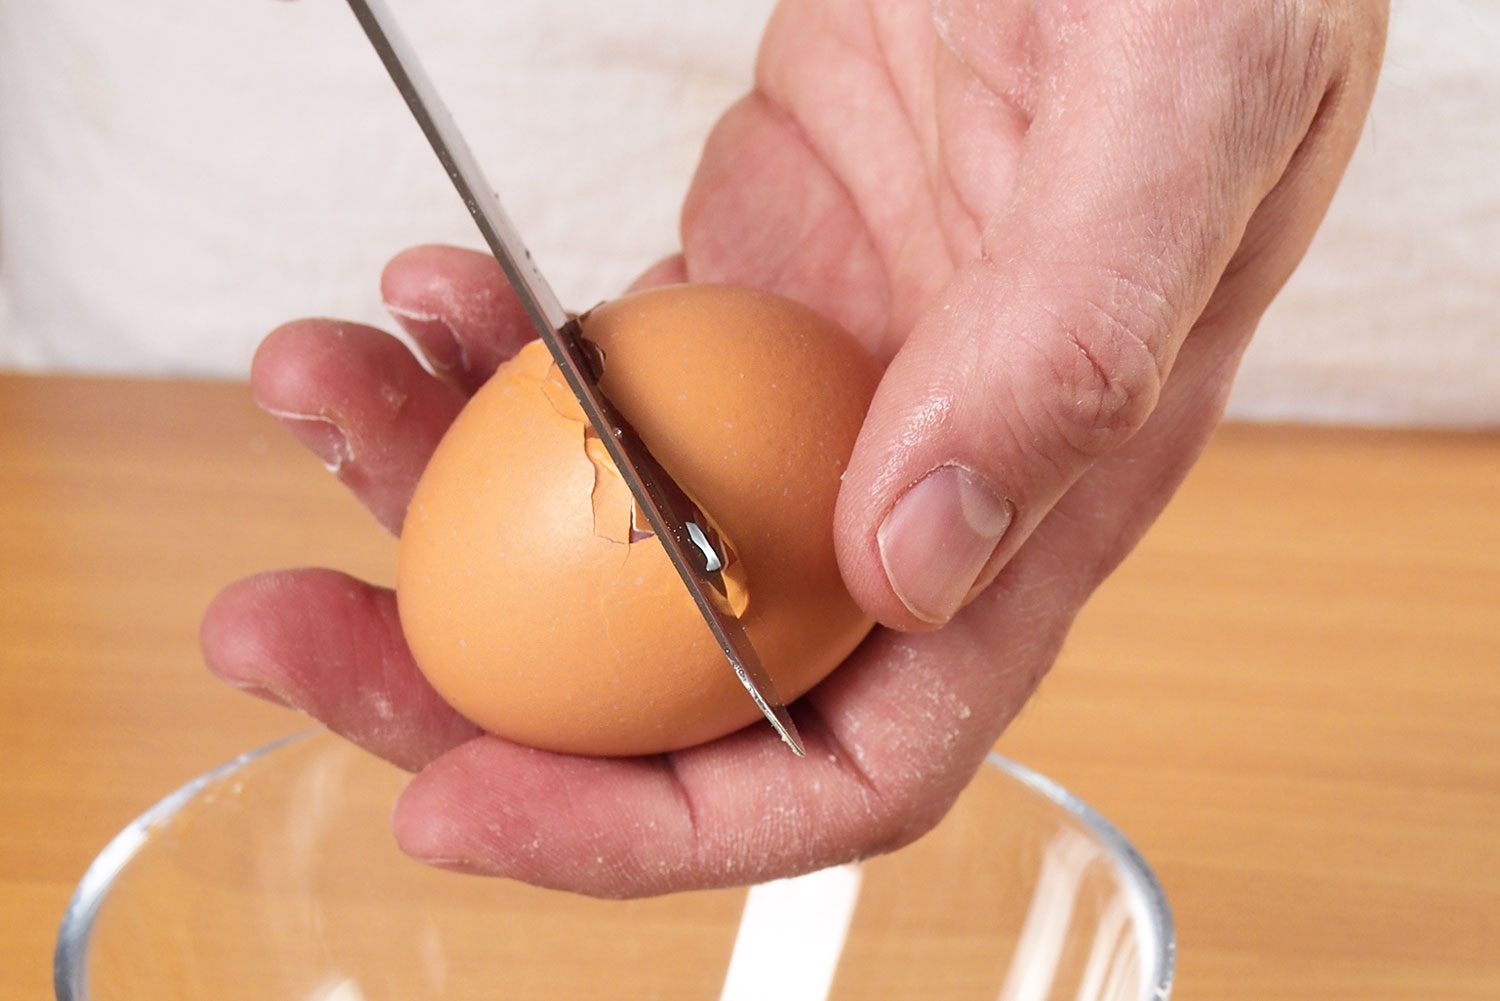 Crack Egg Into Bowl to Make Apple Pie Tarts